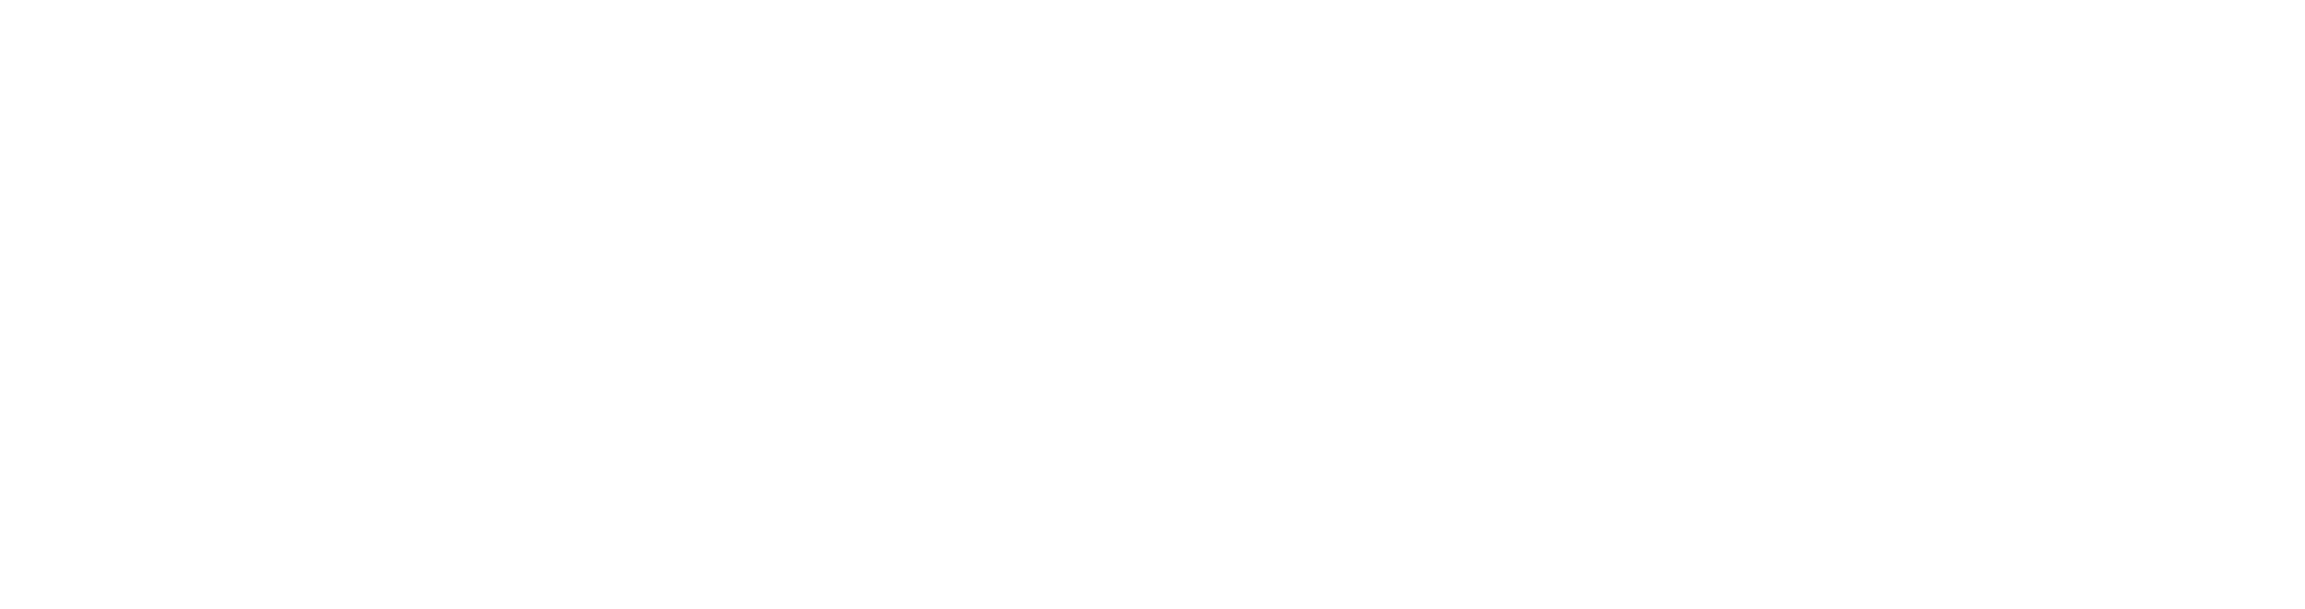 神经学、神经外科、脊柱护理| UTHealth Neurosciences logo in white